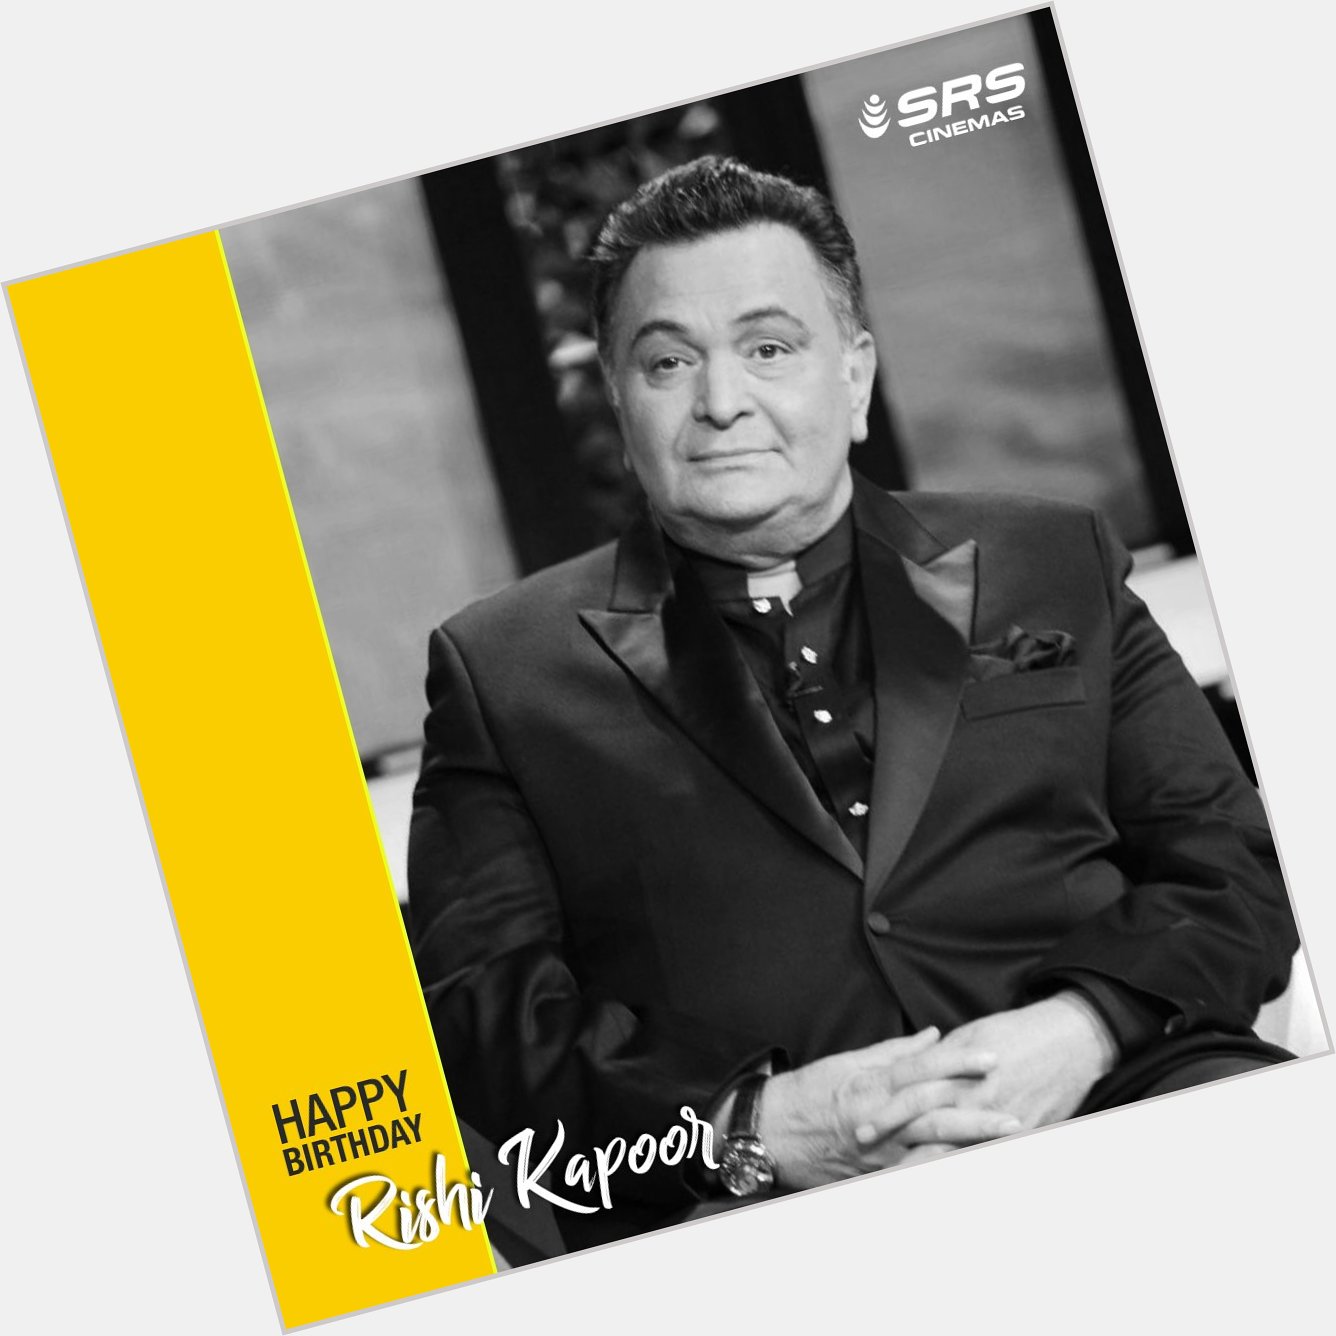 Wishing Rishi Kapoor a very happy birthday! 